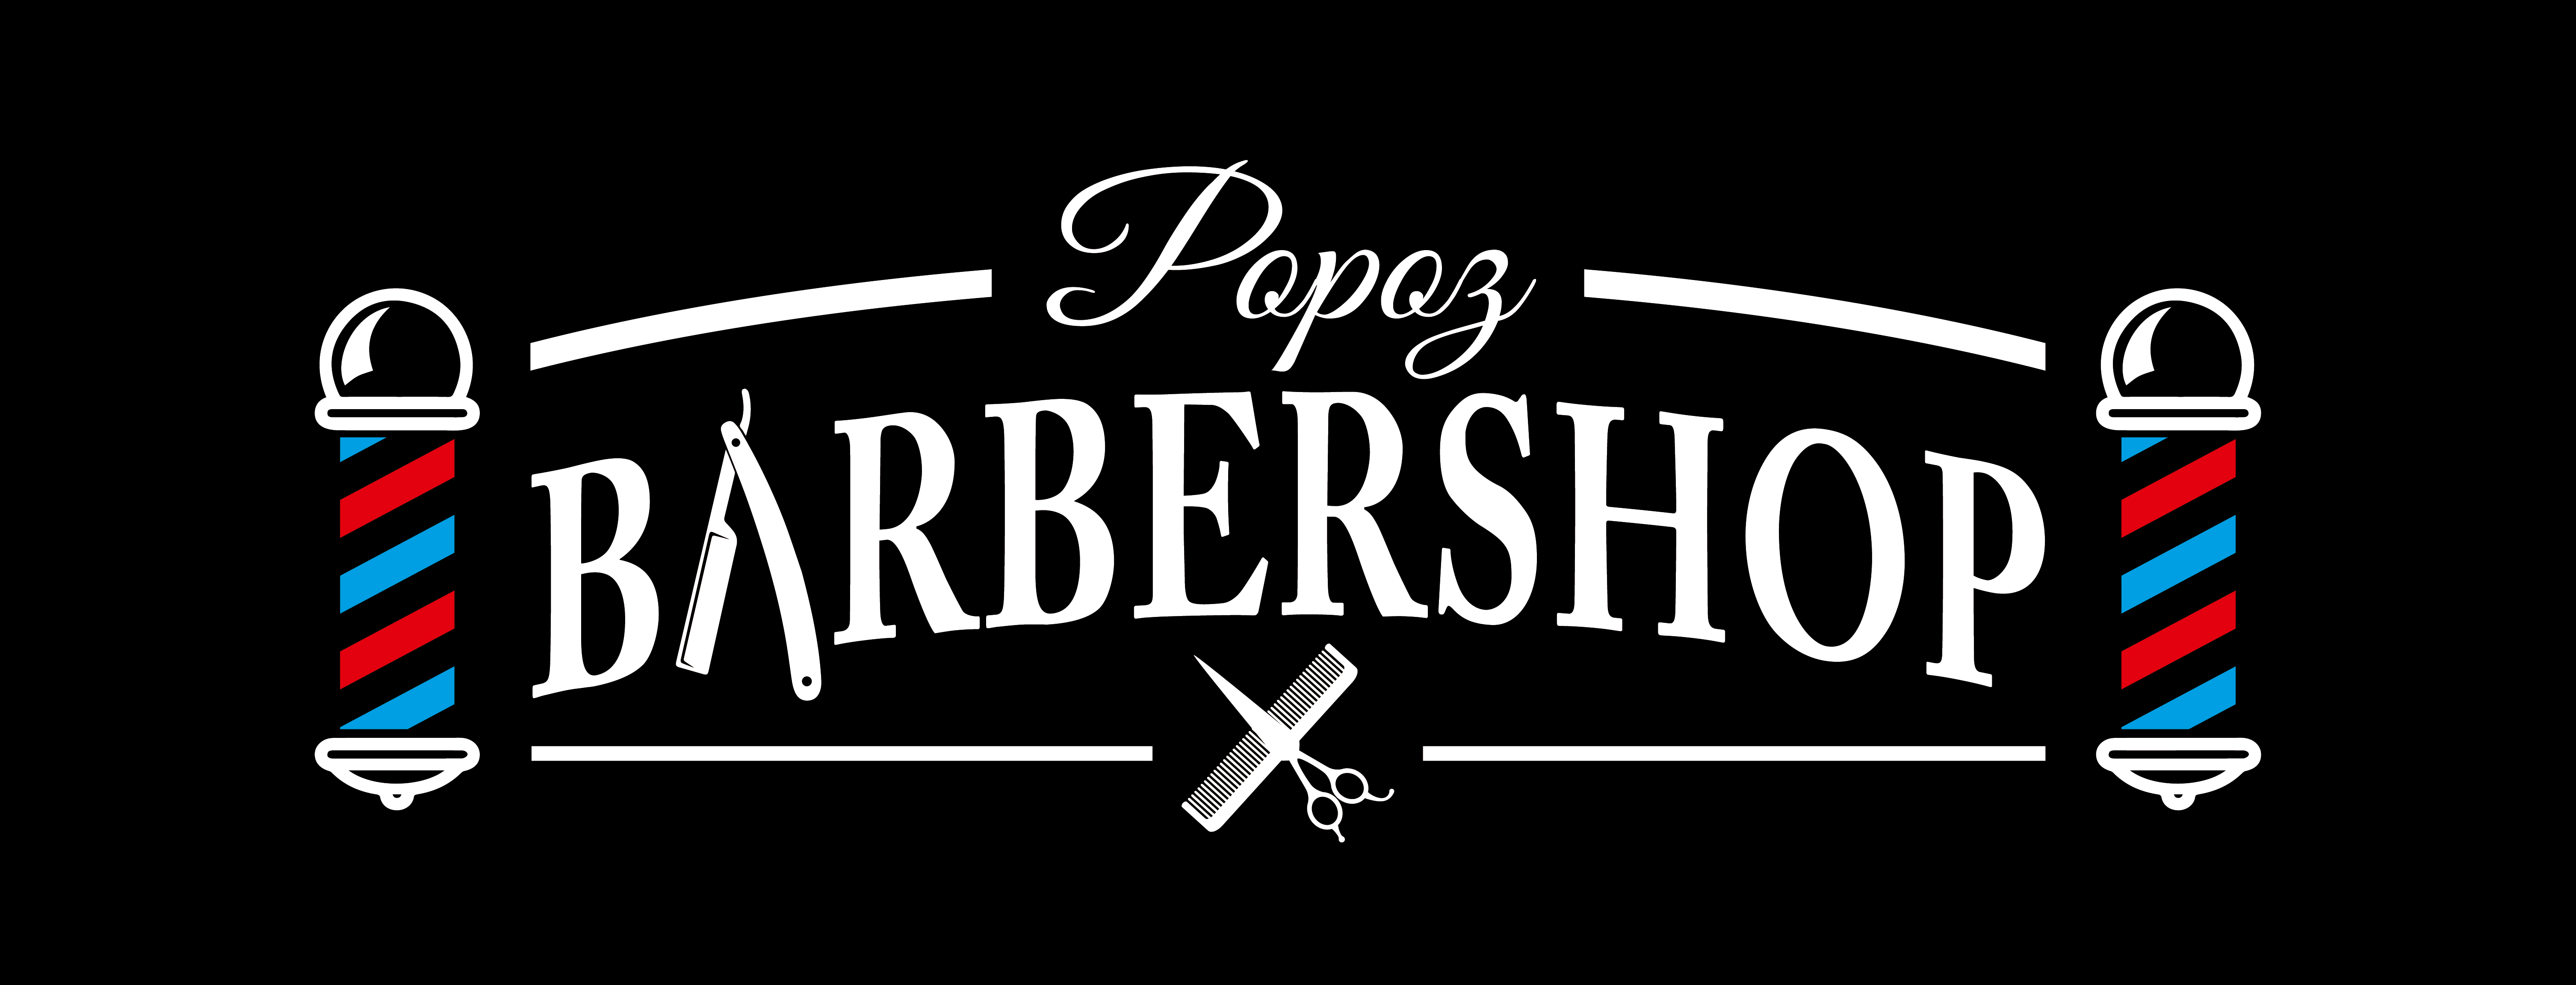 Popoz Barbershop